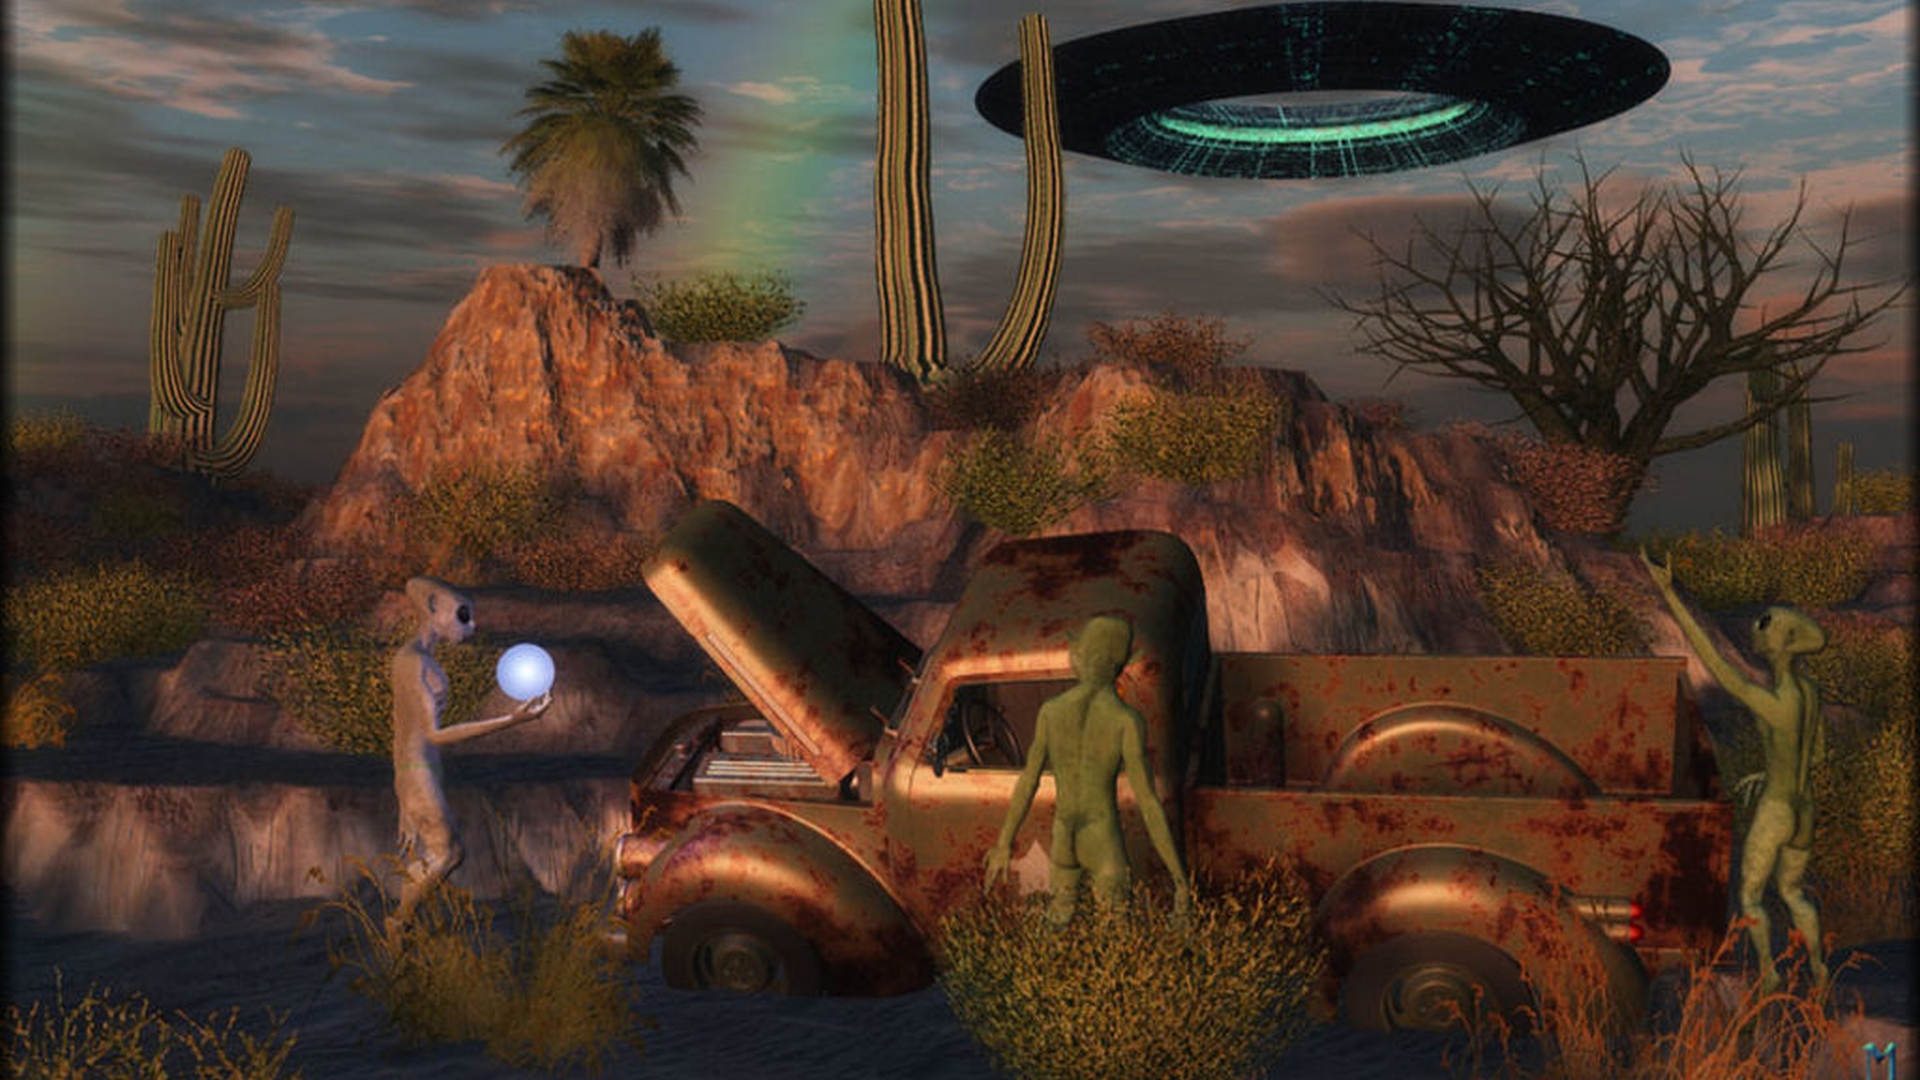 A surrealistic Sci-Fi desktop wallpaper featuring an imposing alien-like creature.